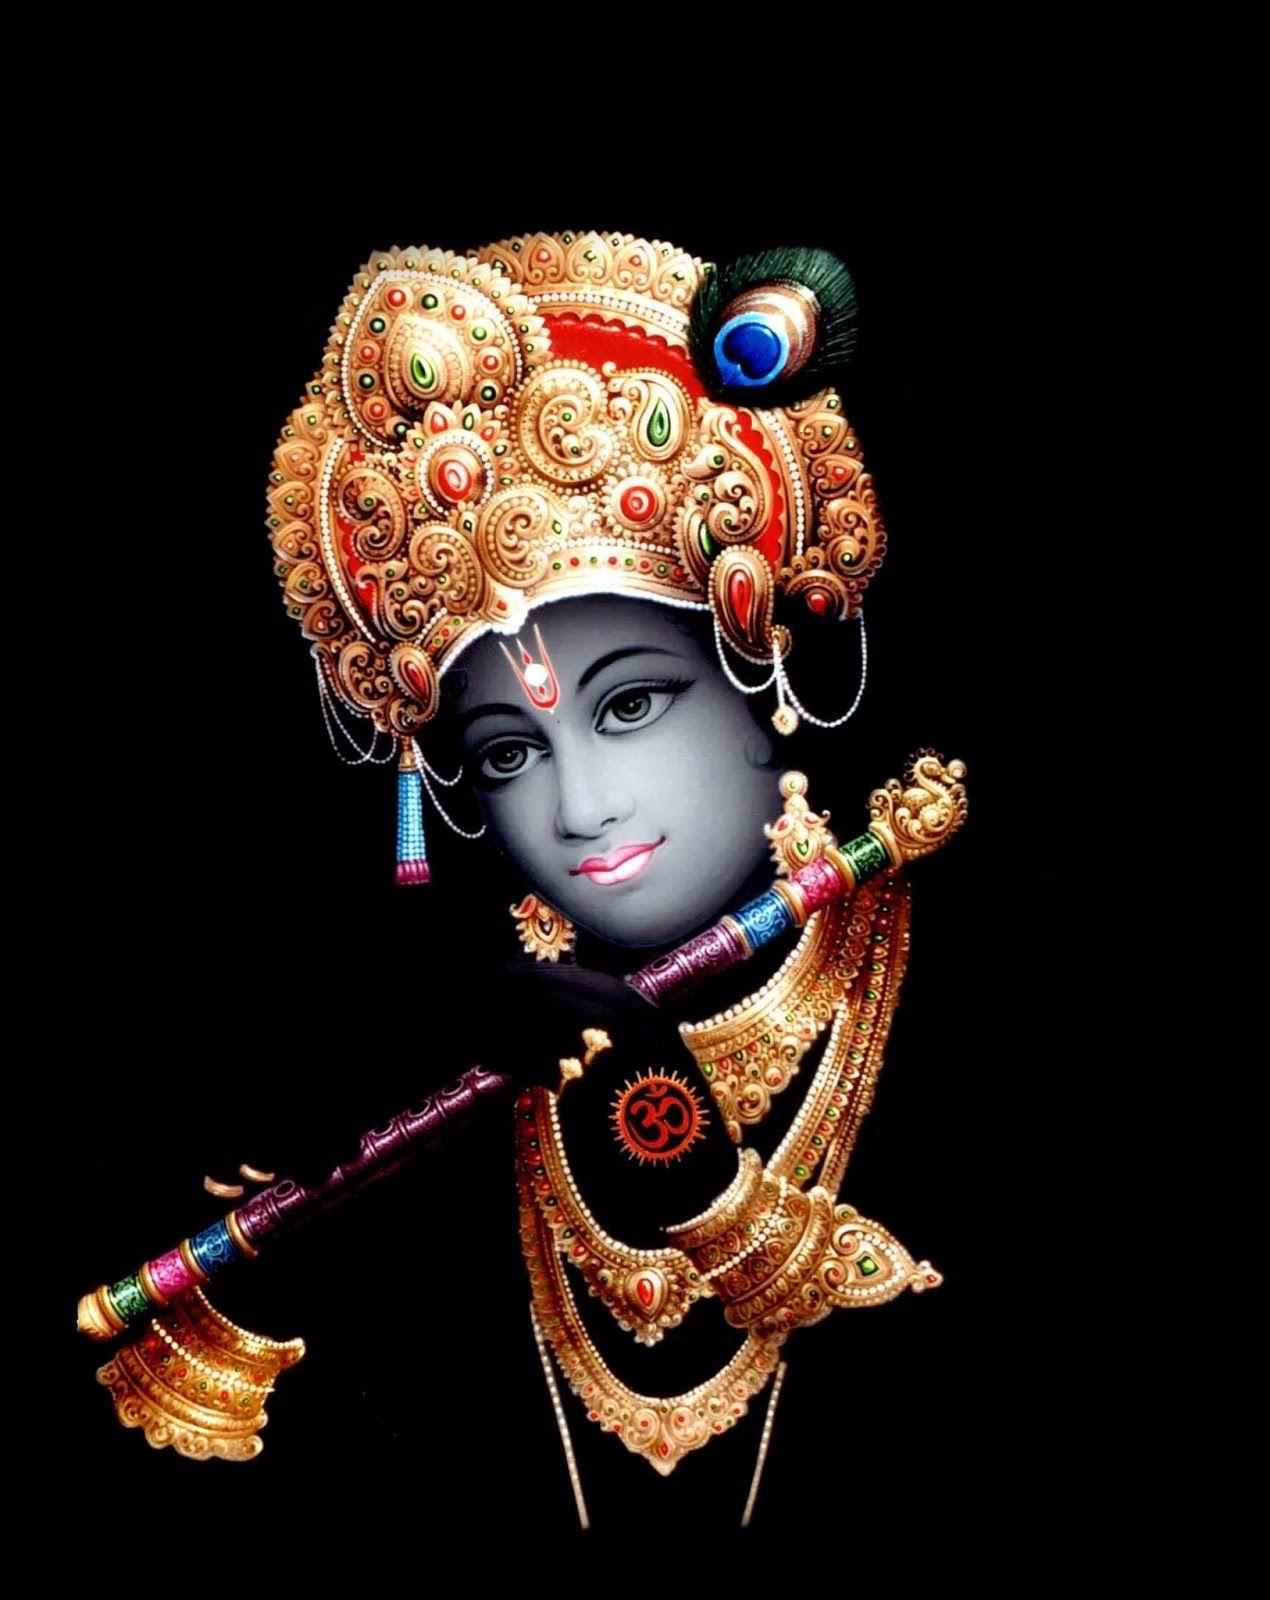 HD WALLPAPERS GOD IMAGES DOWNLOAD: Hindu God